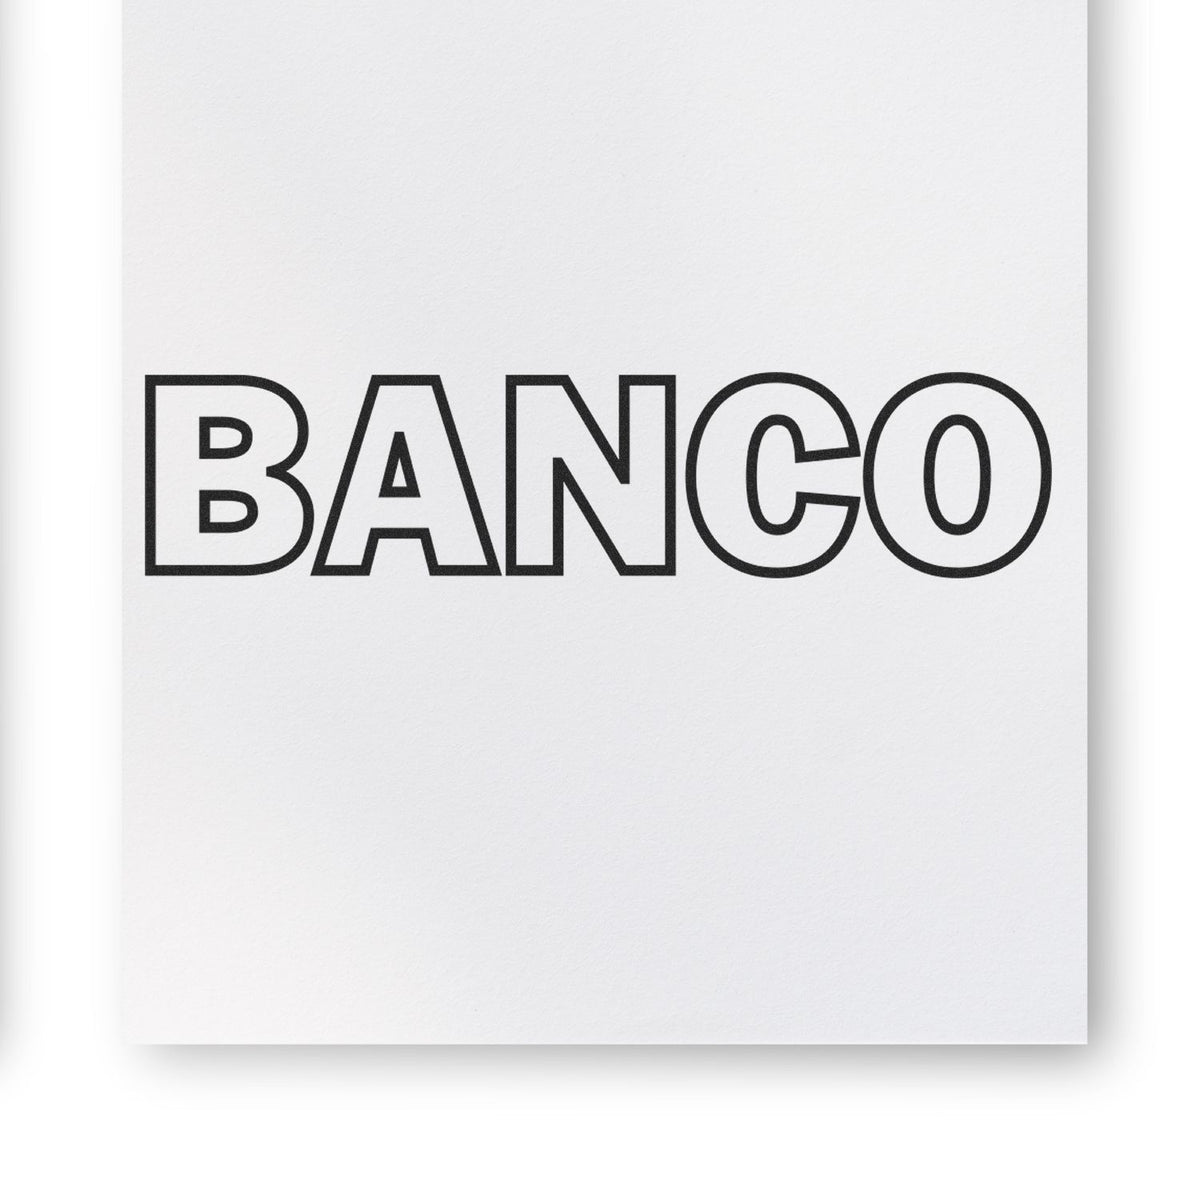 Banco Rubber Stamp Lifestyle Photo